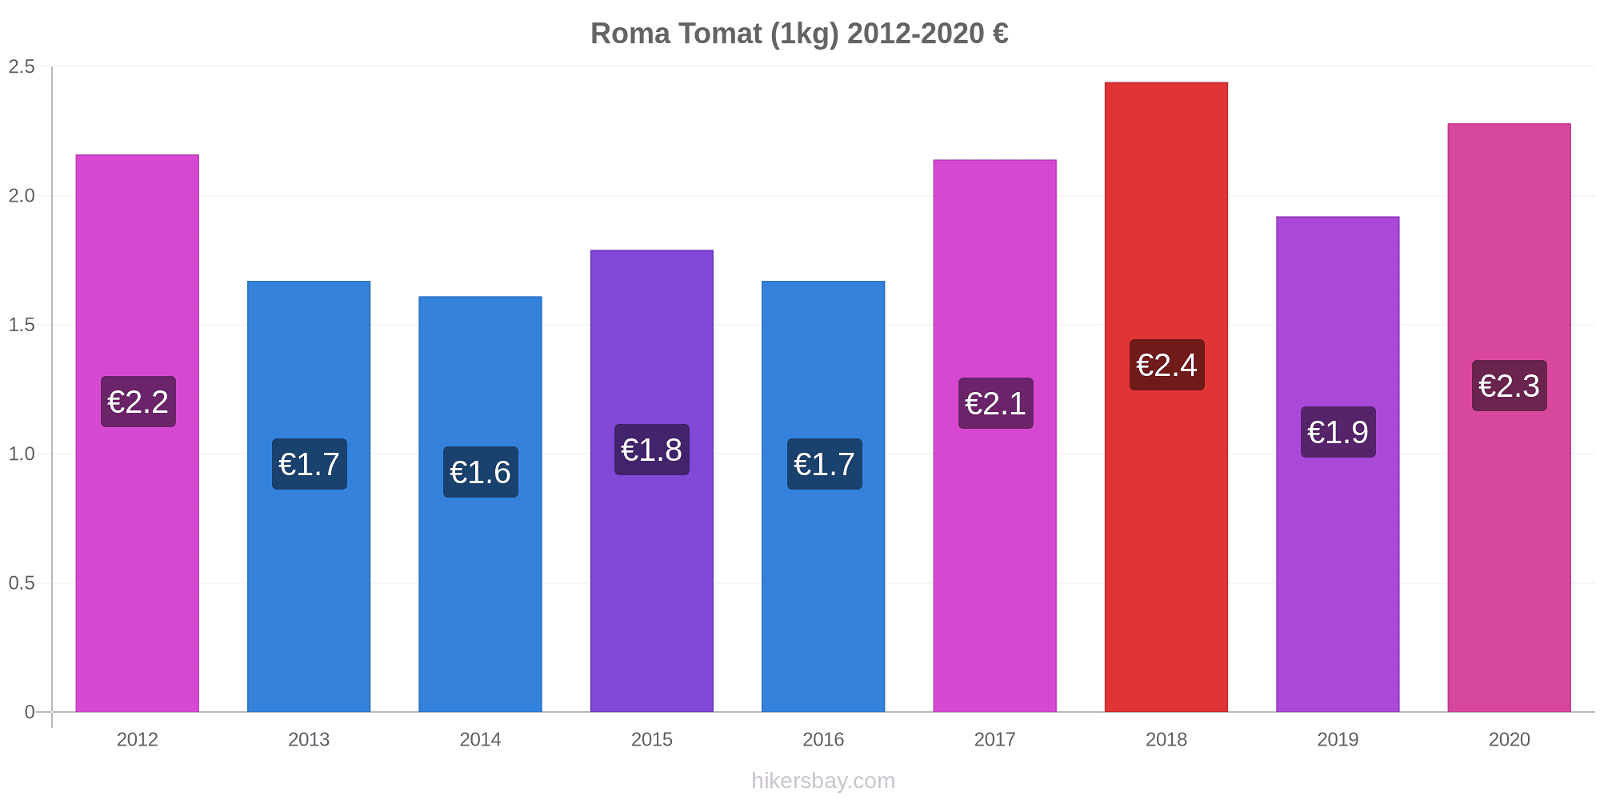 Roma perubahan harga Tomat (1kg) hikersbay.com